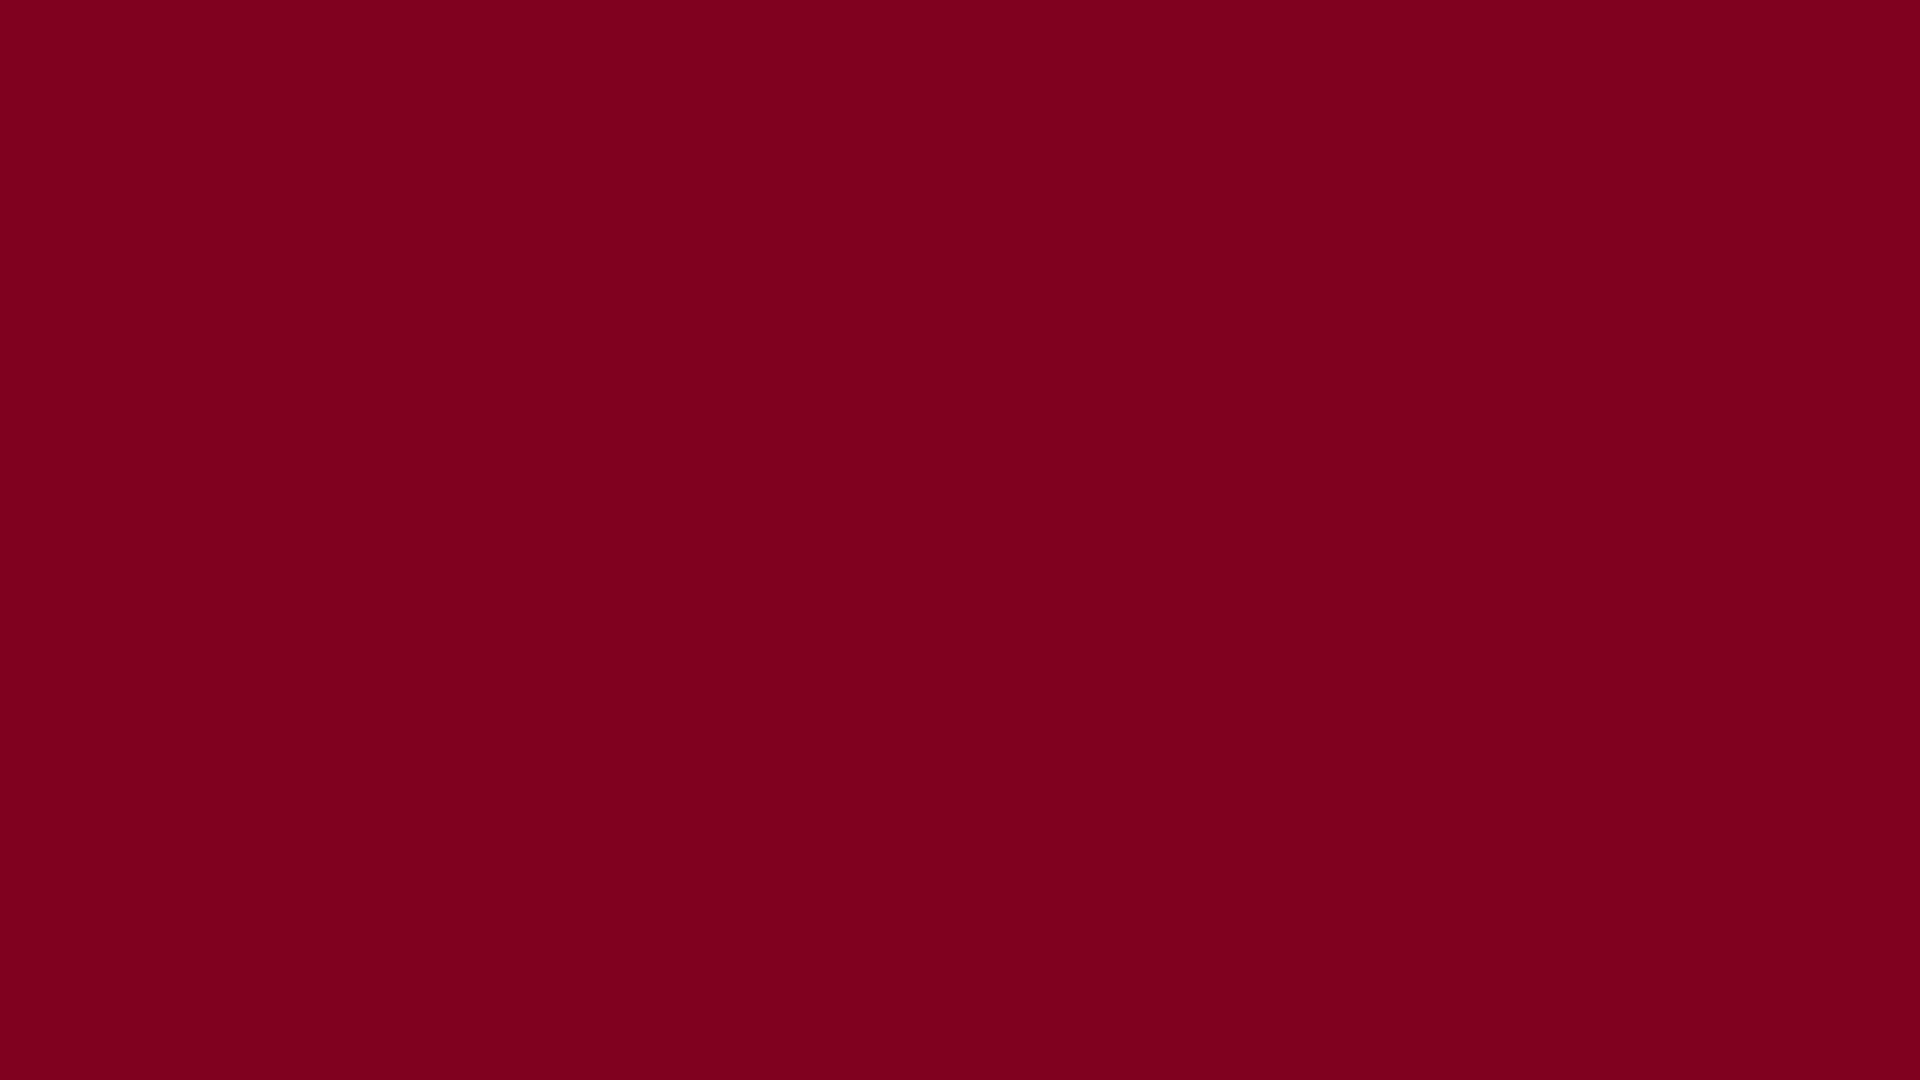 1920x1080  Burgundy Solid Color Background